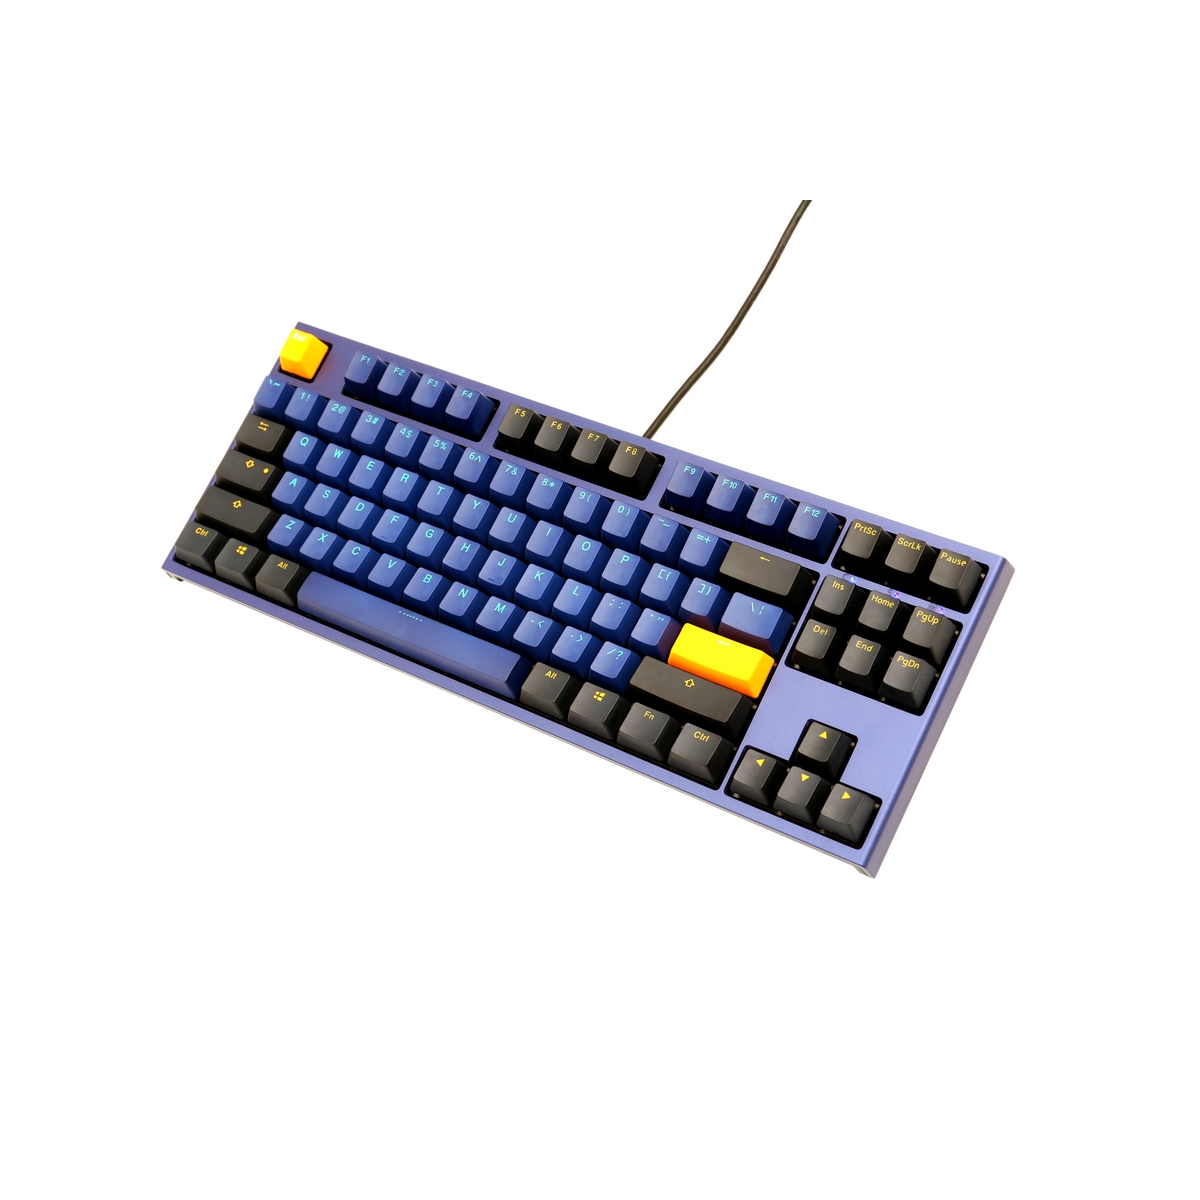 Ducky - Ducky One 2 TKL Horizon Red Cherry MX Switch USB Mechanical Gaming Keyboard UK Layout